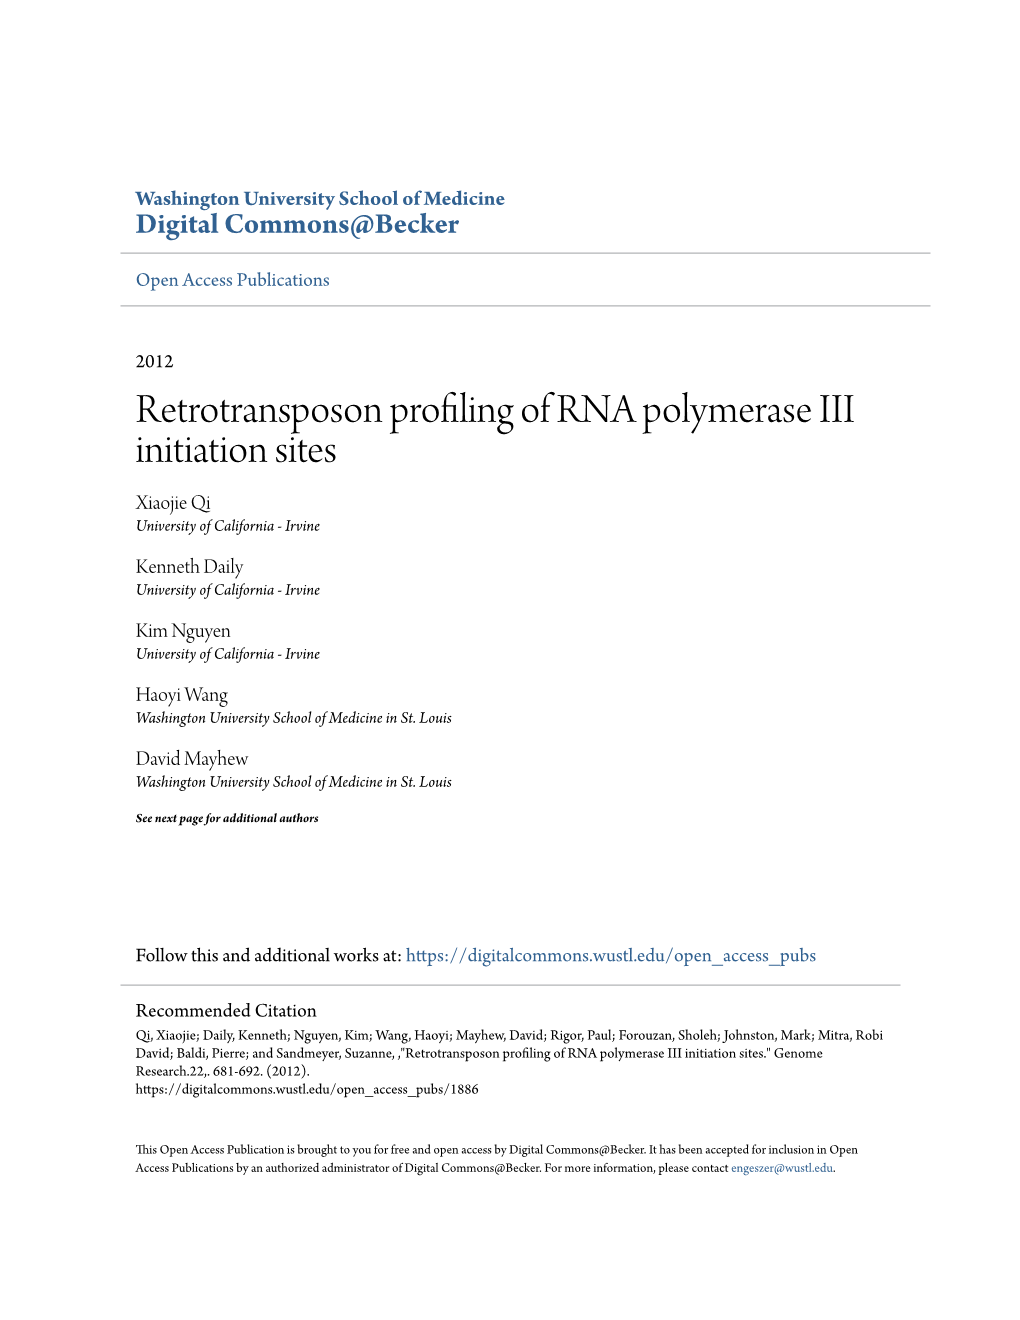 Retrotransposon Profiling of RNA Polymerase III Initiation Sites Xiaojie Qi University of California - Irvine